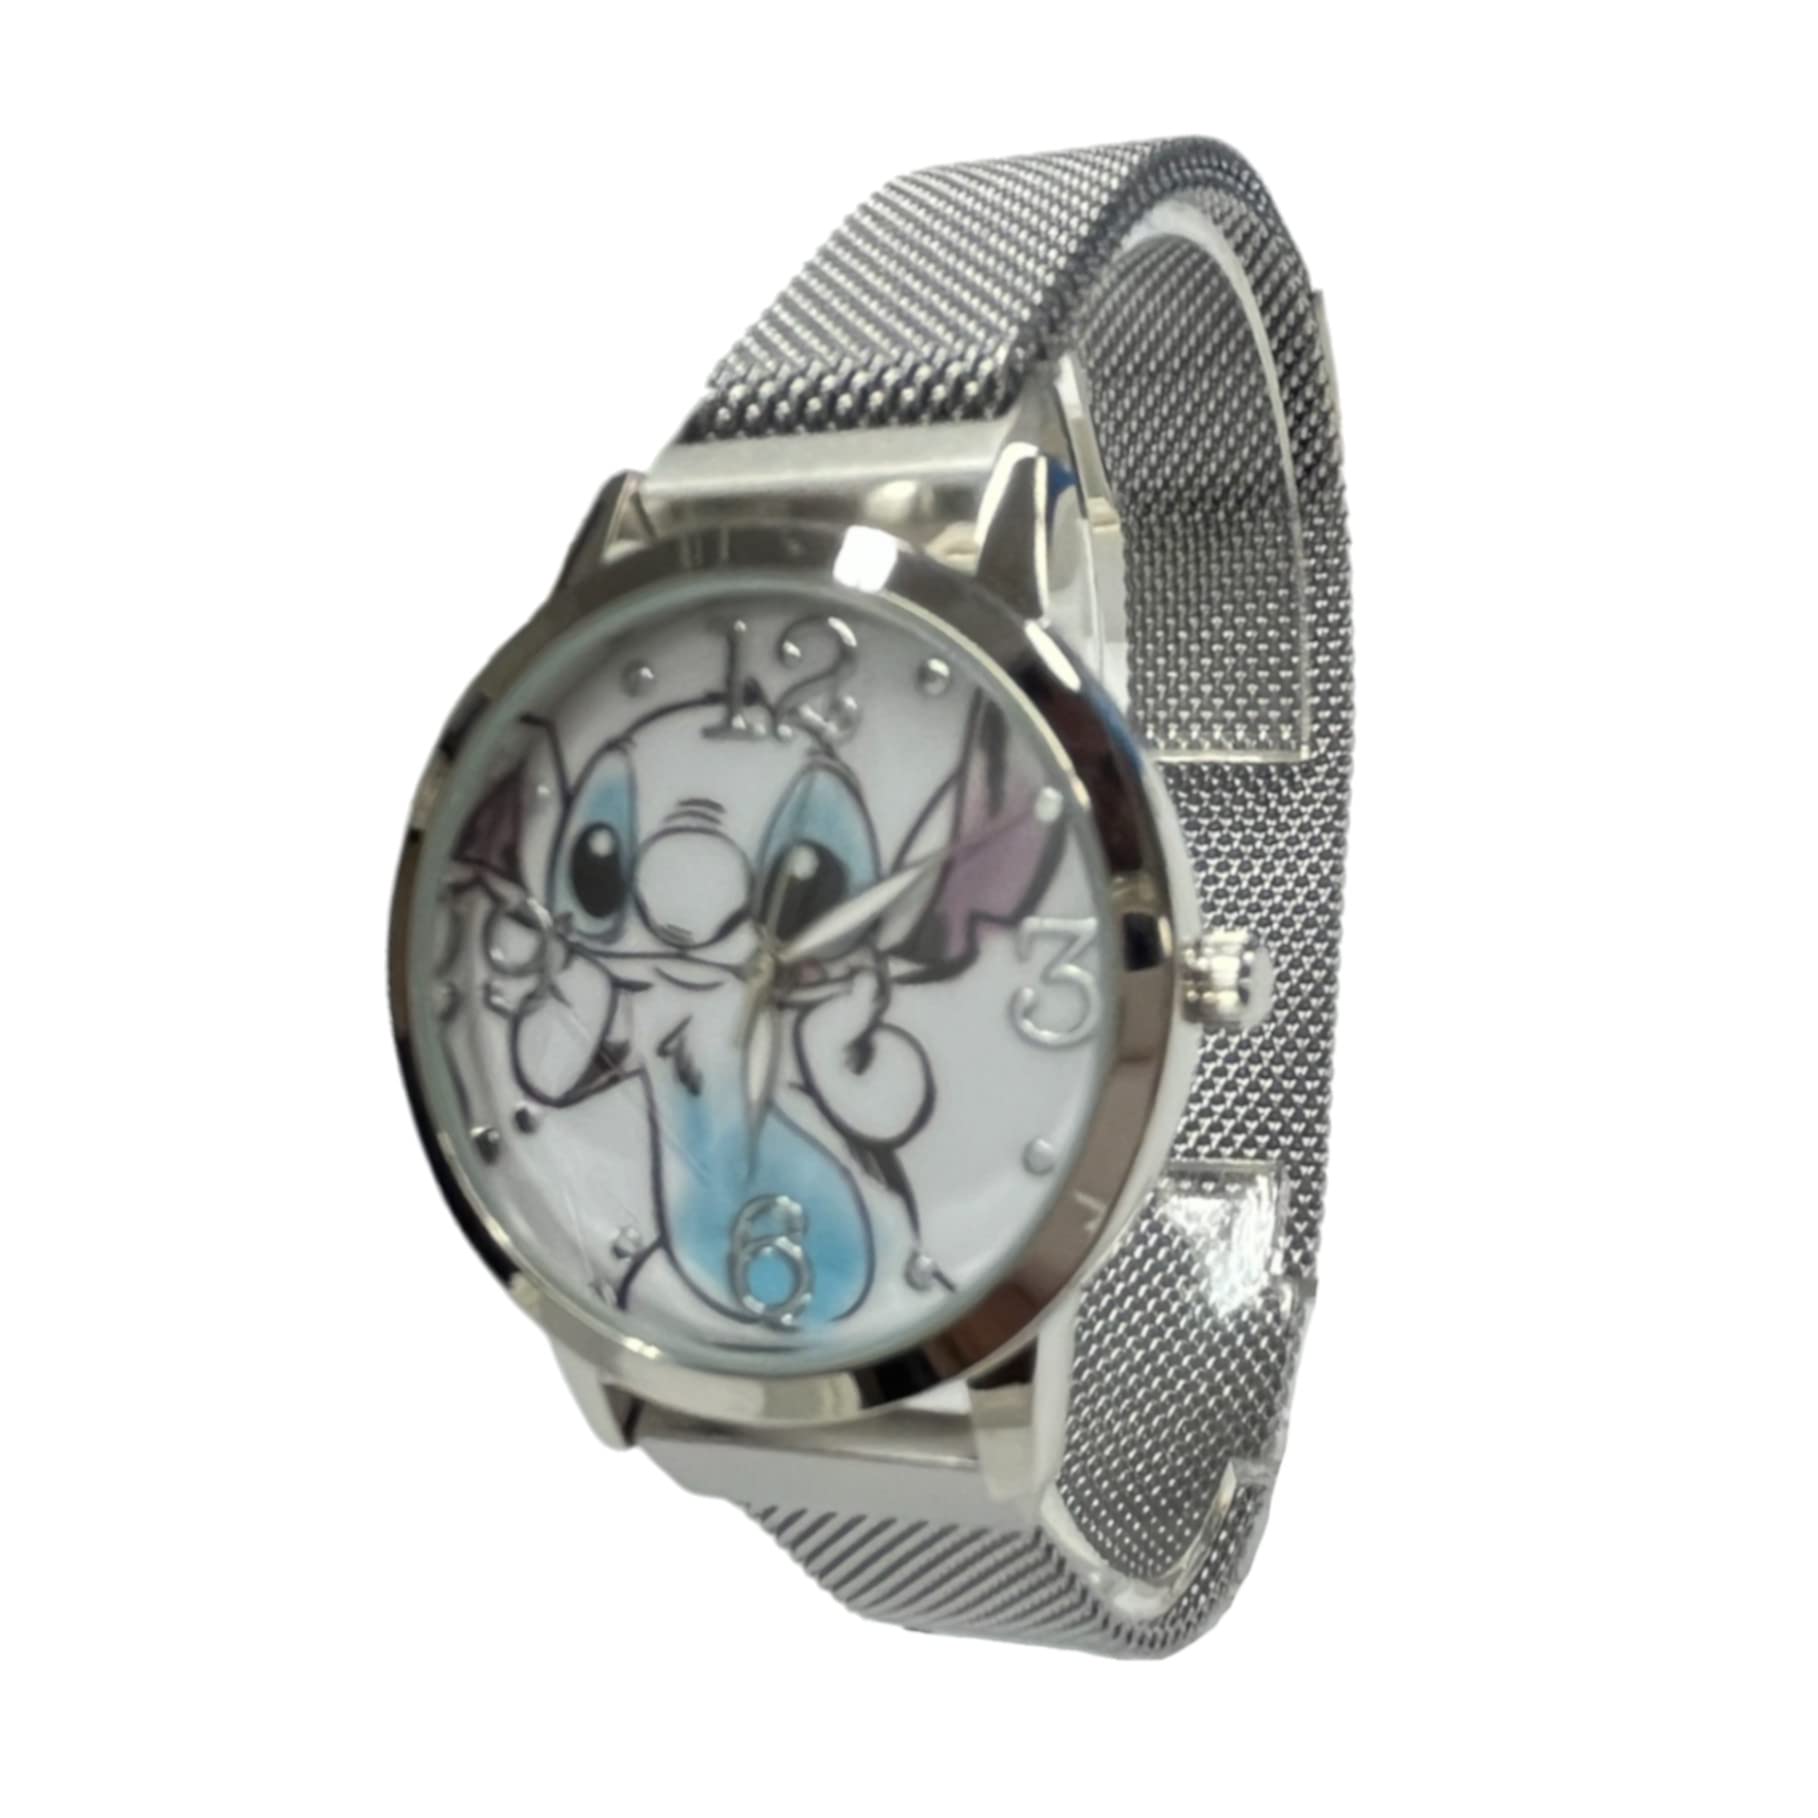 Accutime Kids LILO & Stitch Analog Quartz Wrist Watch with Small Face, Silver Accents for Girls, Boys, Kids (LAS8014AZ)